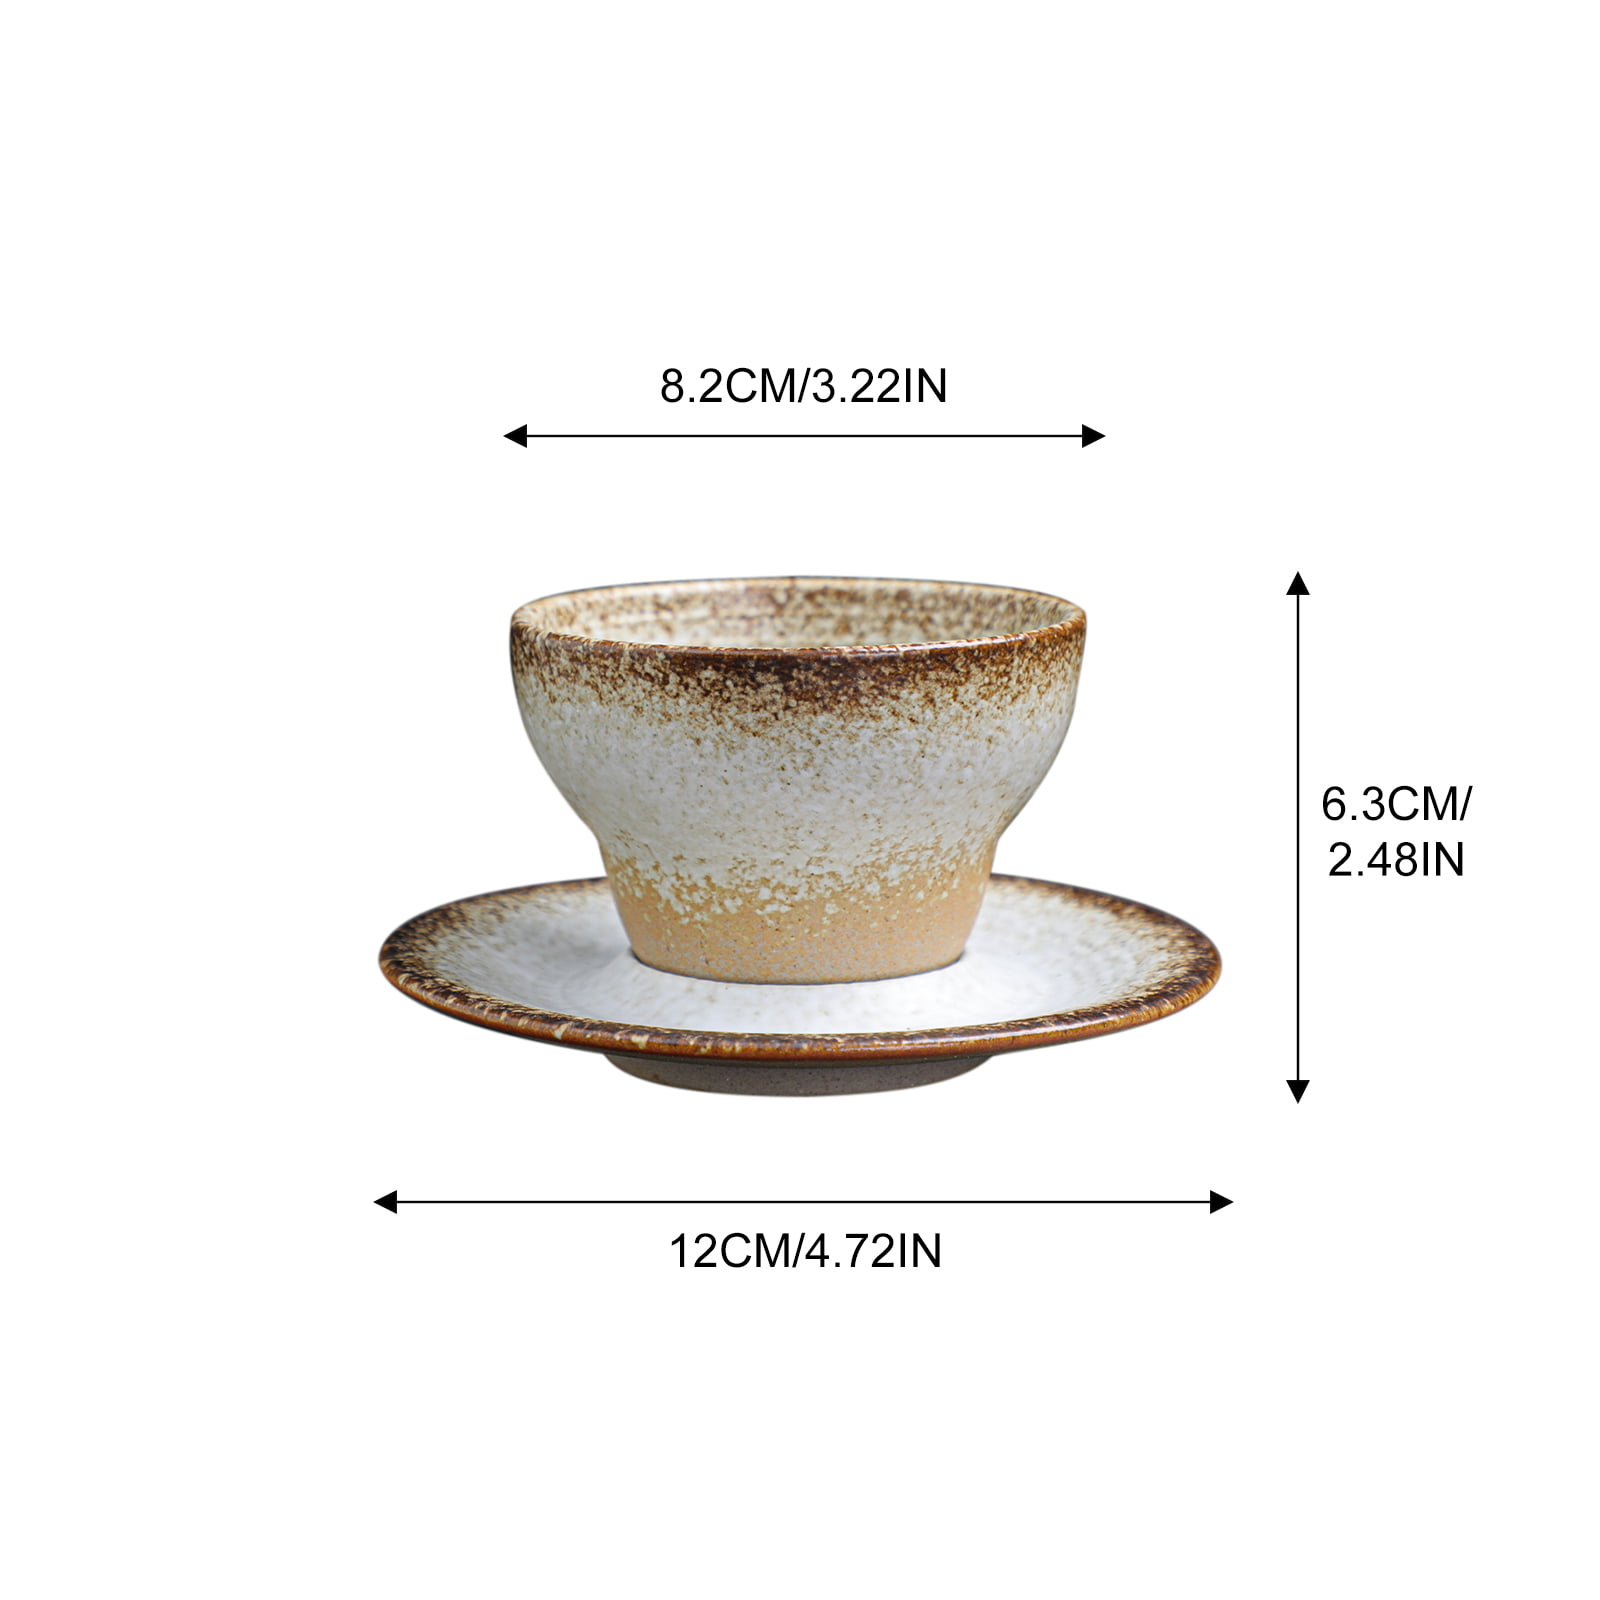 2 Pottery Black Cone Shape Espresso Cups, Set of Two 4oz Ceramic